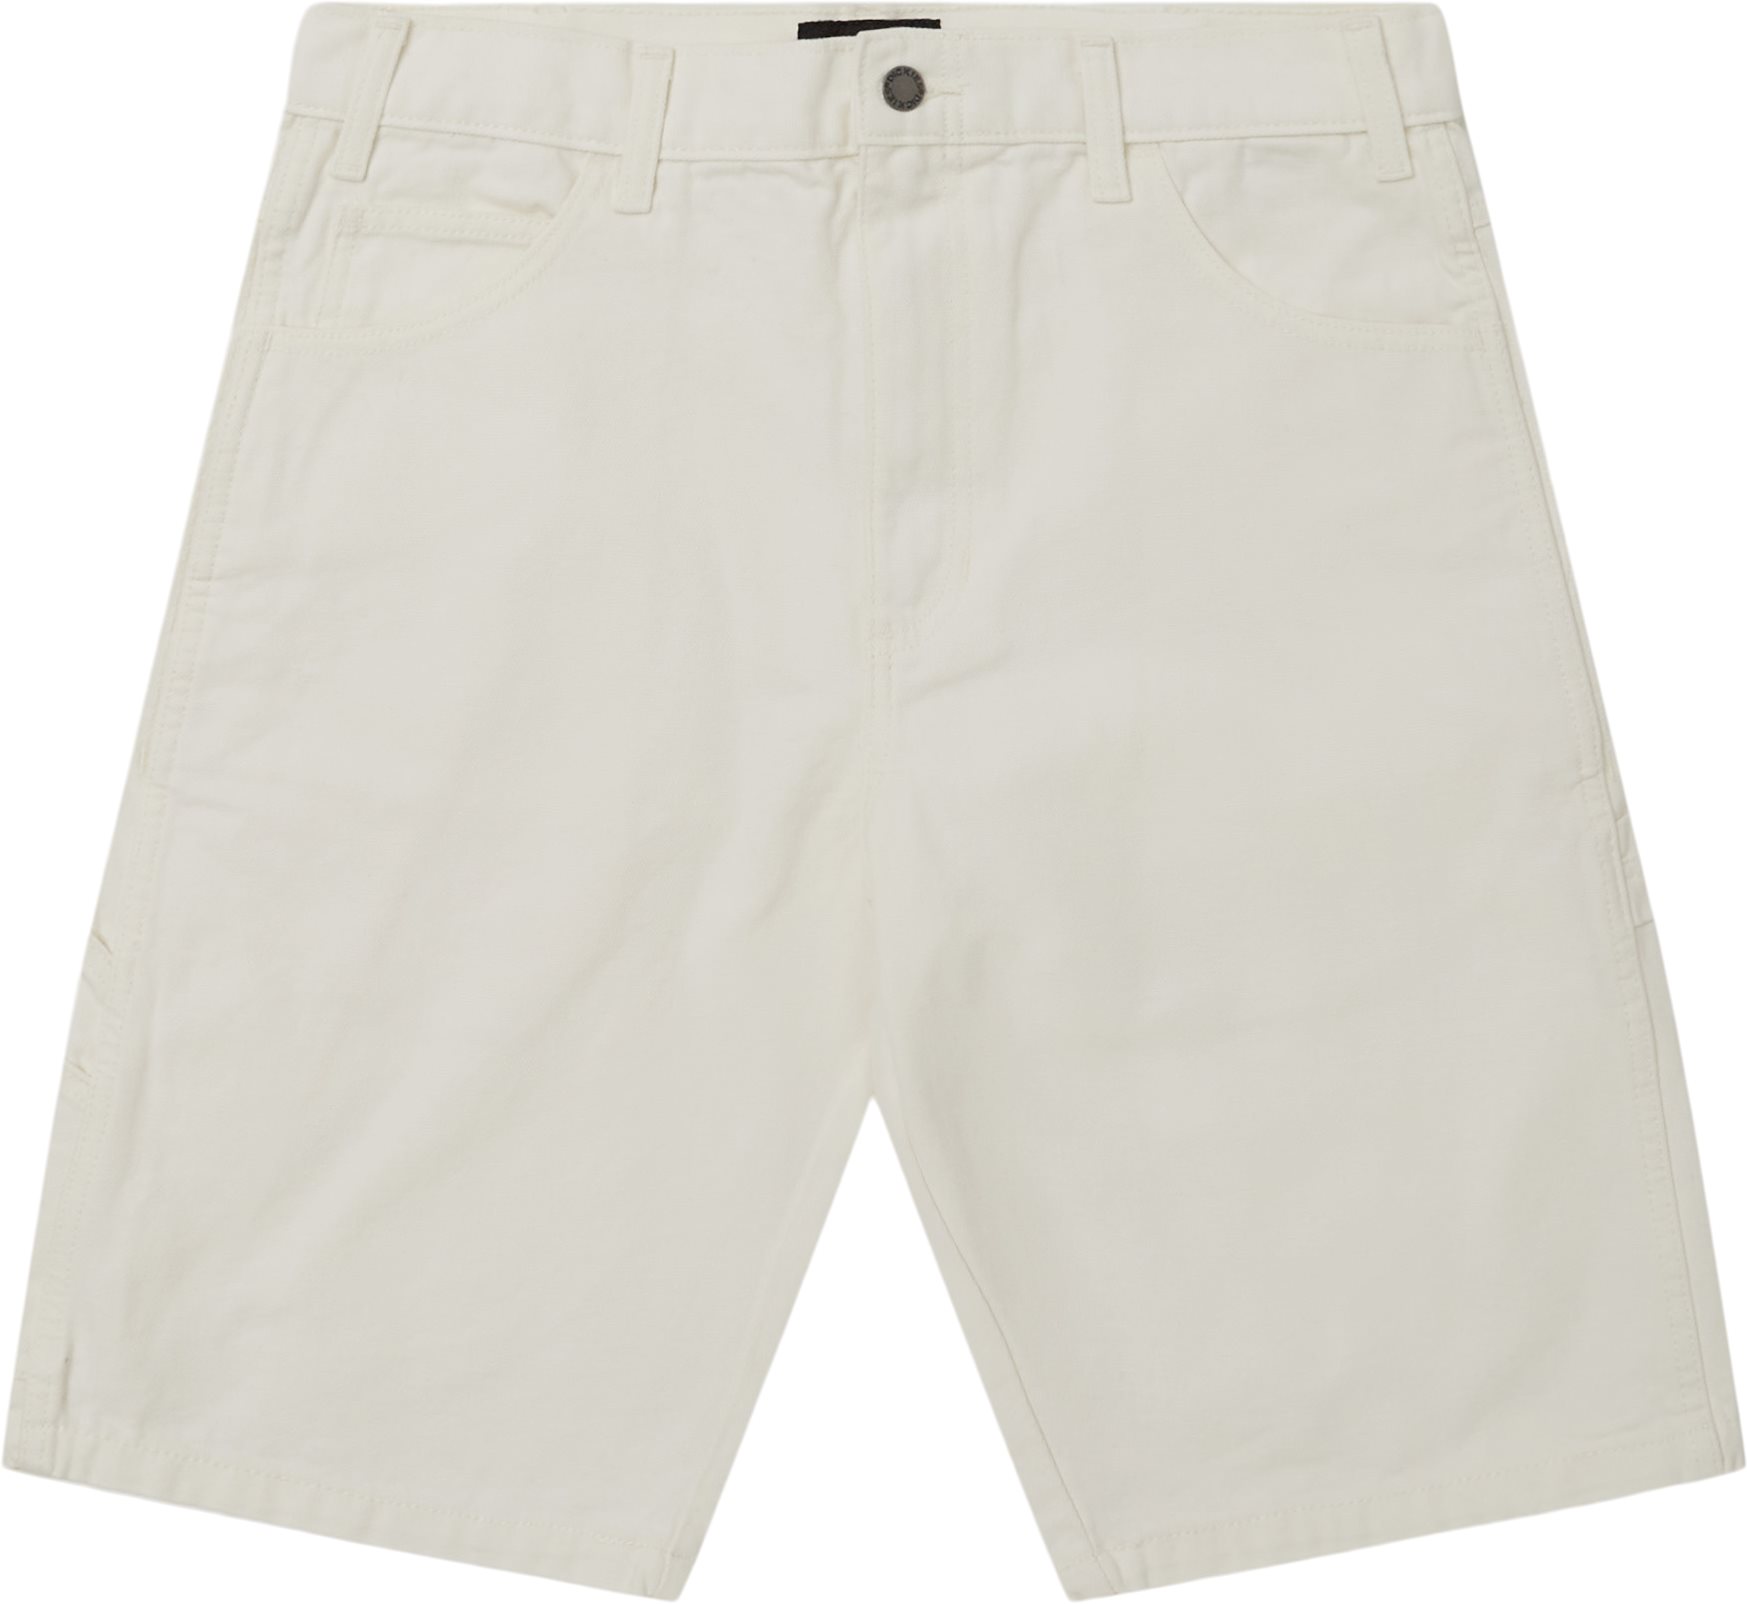 Duck Canvas Shorts - Shorts - Regular fit - Hvid